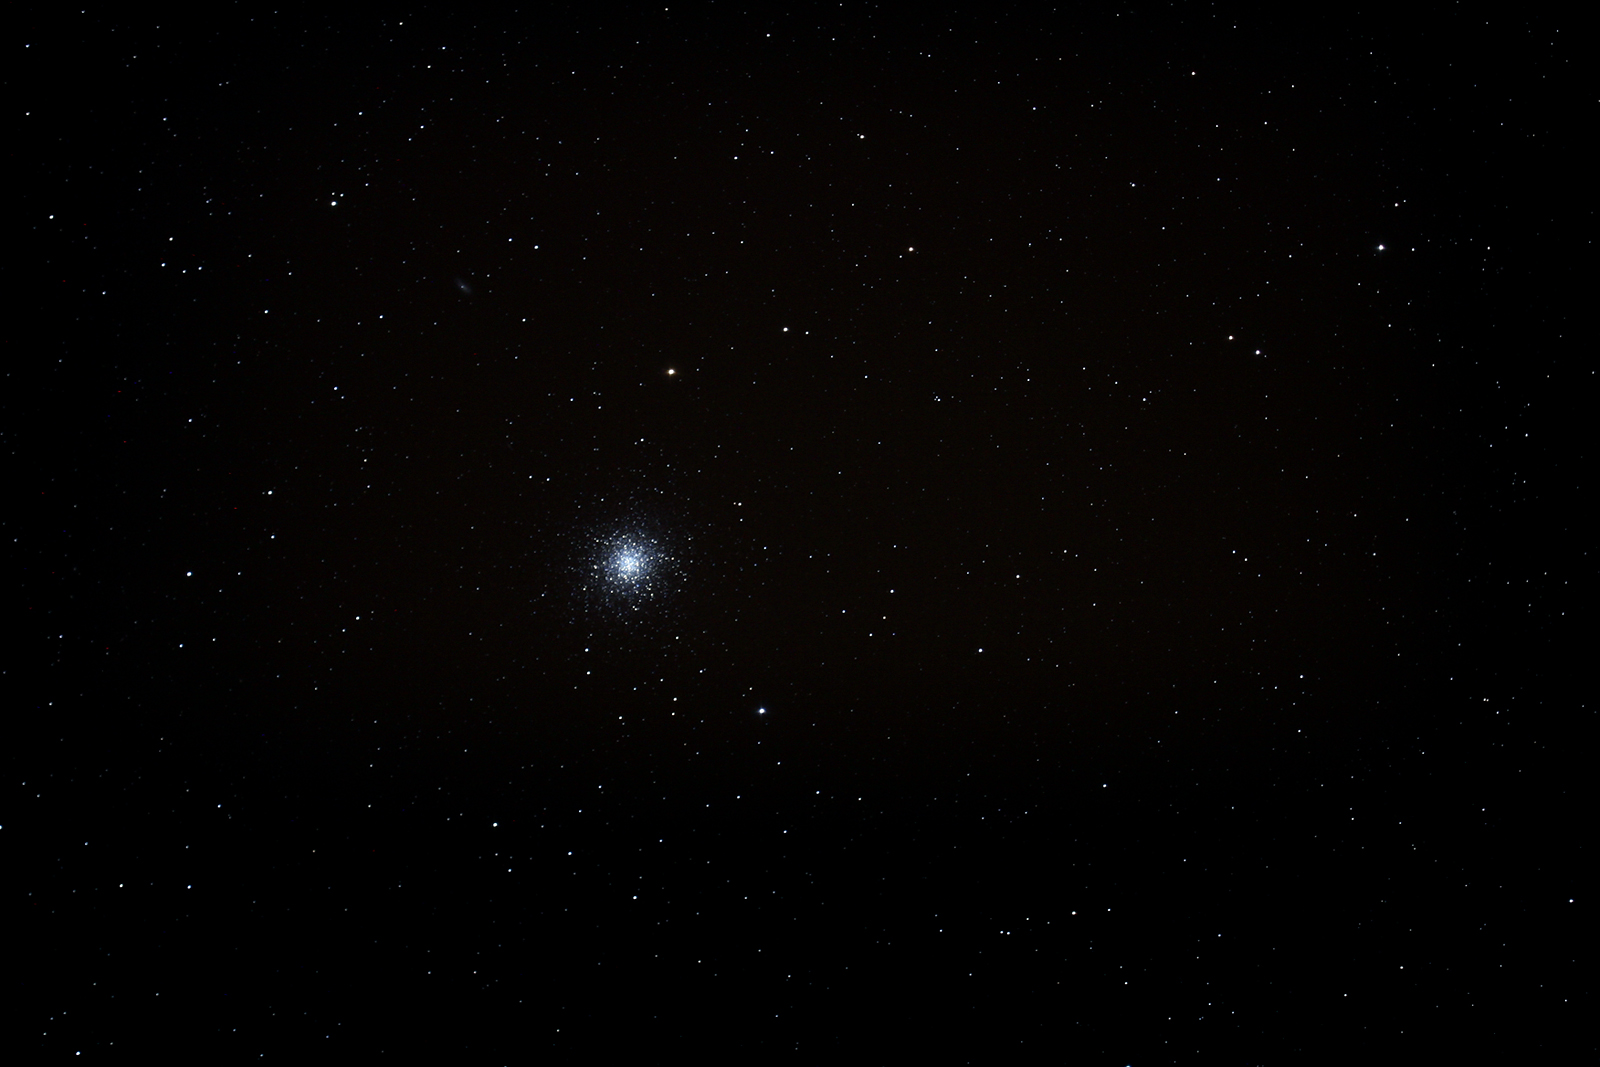 Hyperstar-M13_Globular-50pct.jpg